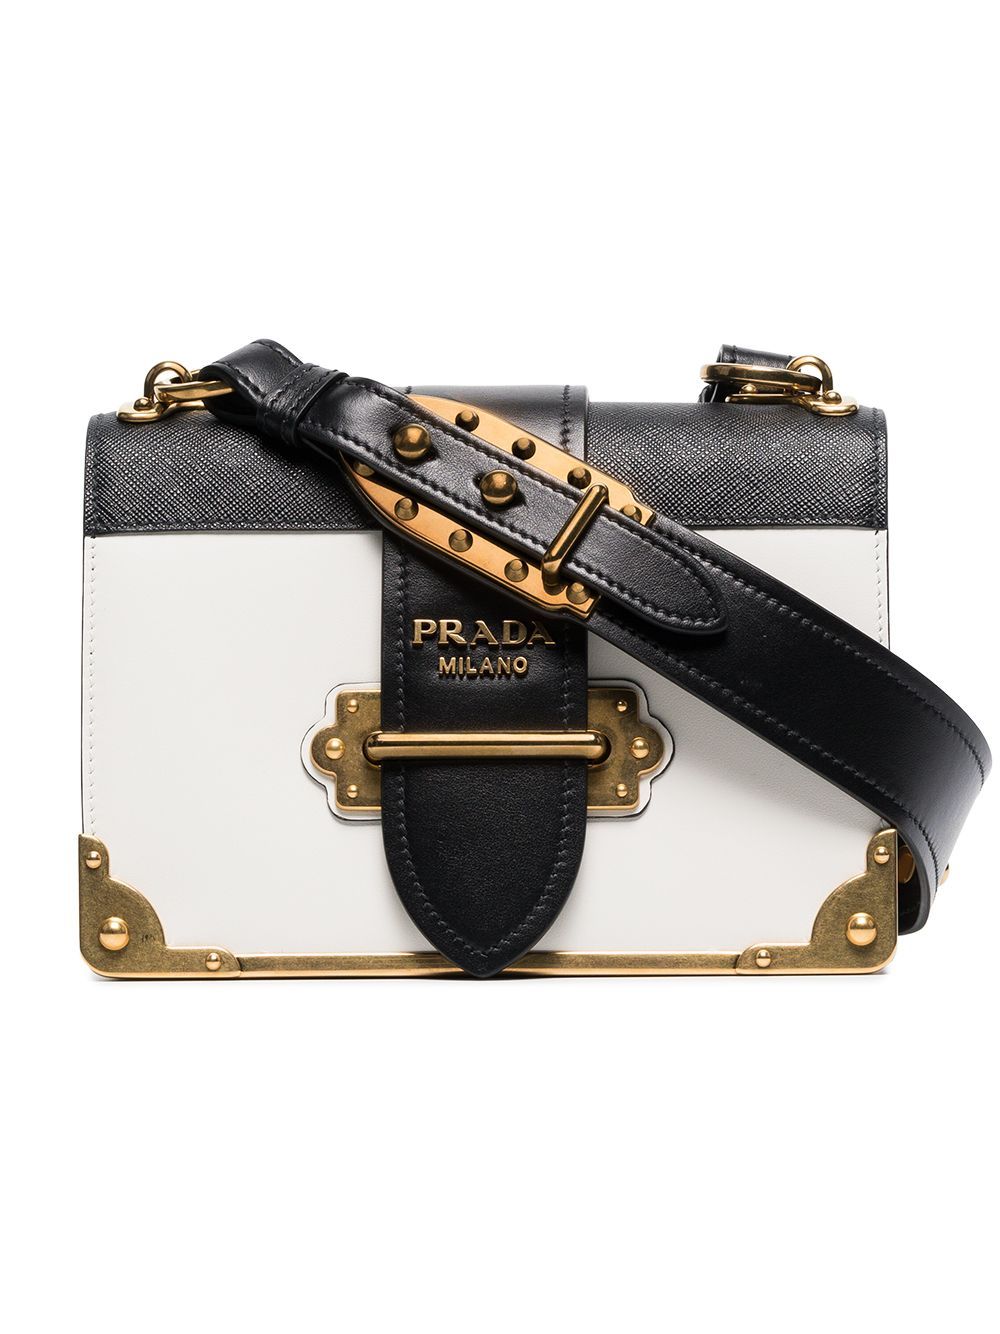 Prada black and white cahier leather bag | FarFetch Global